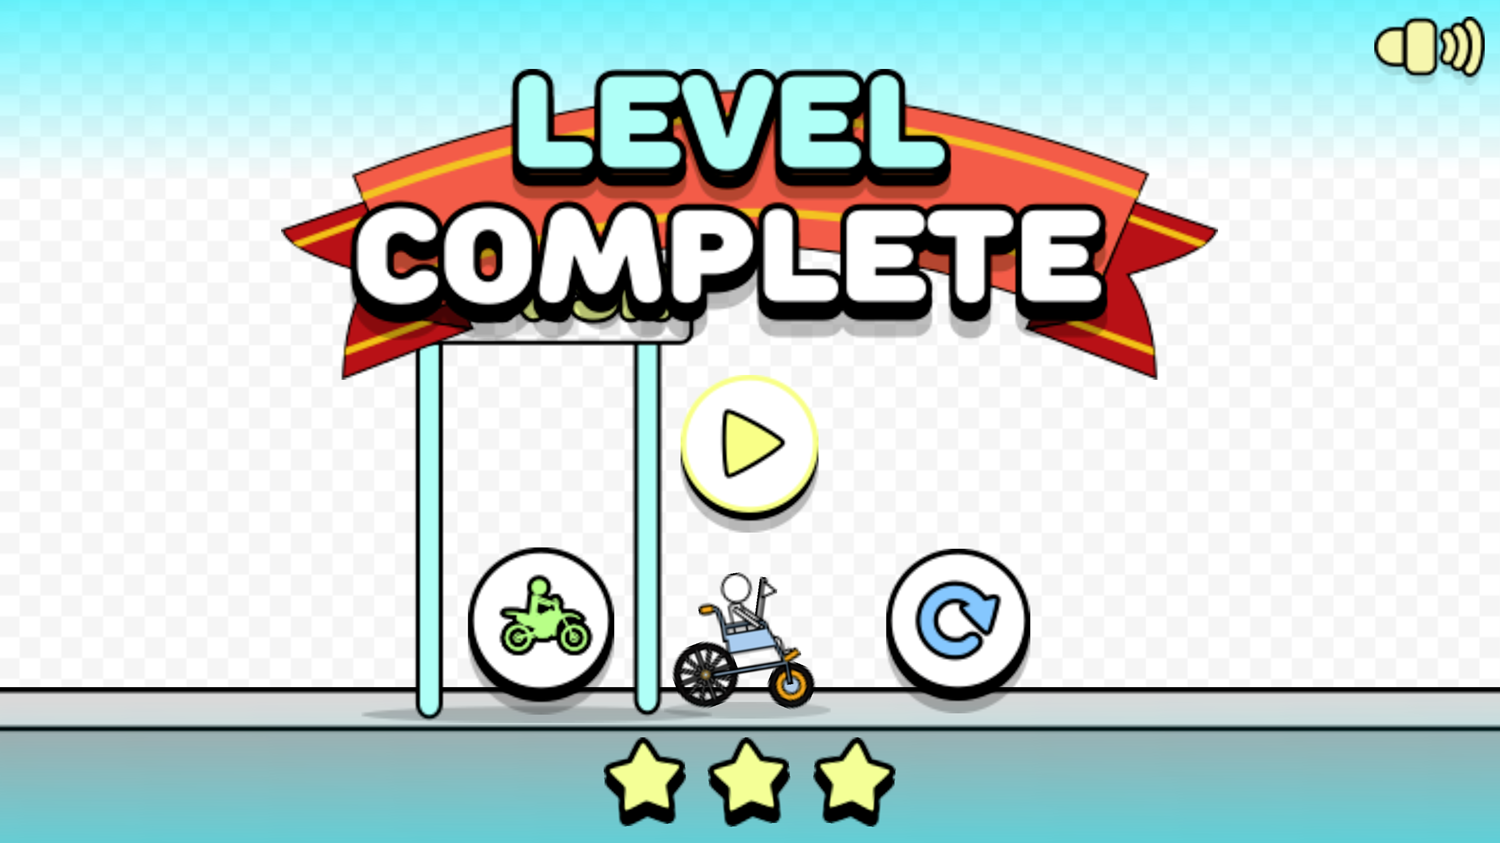 Pocket Racing Game Level Complete Screenshot.